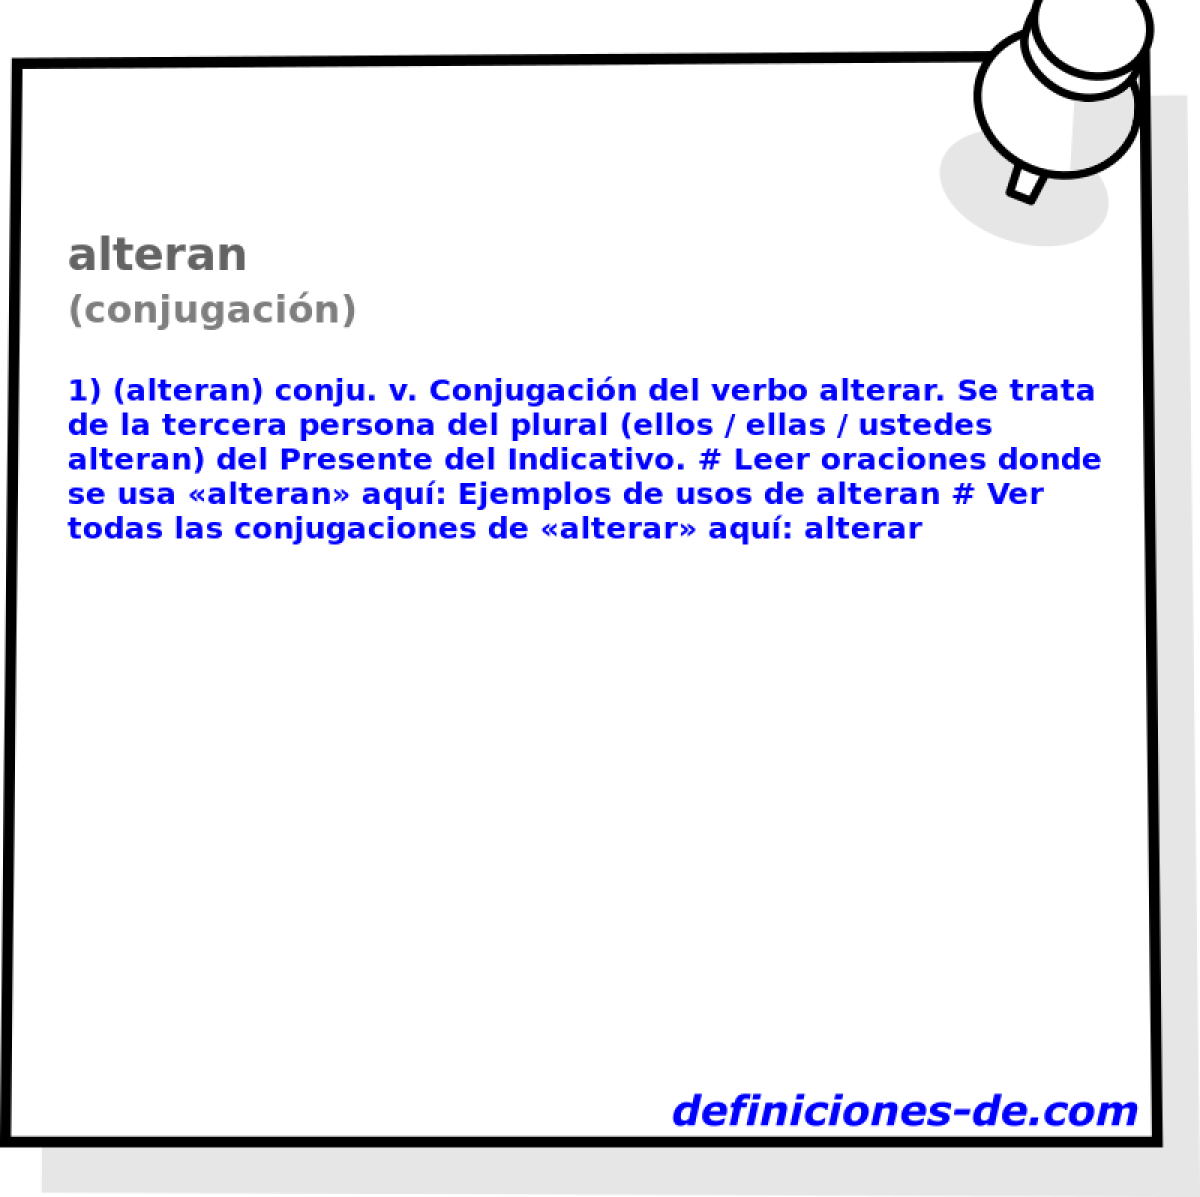 alteran (conjugacin)